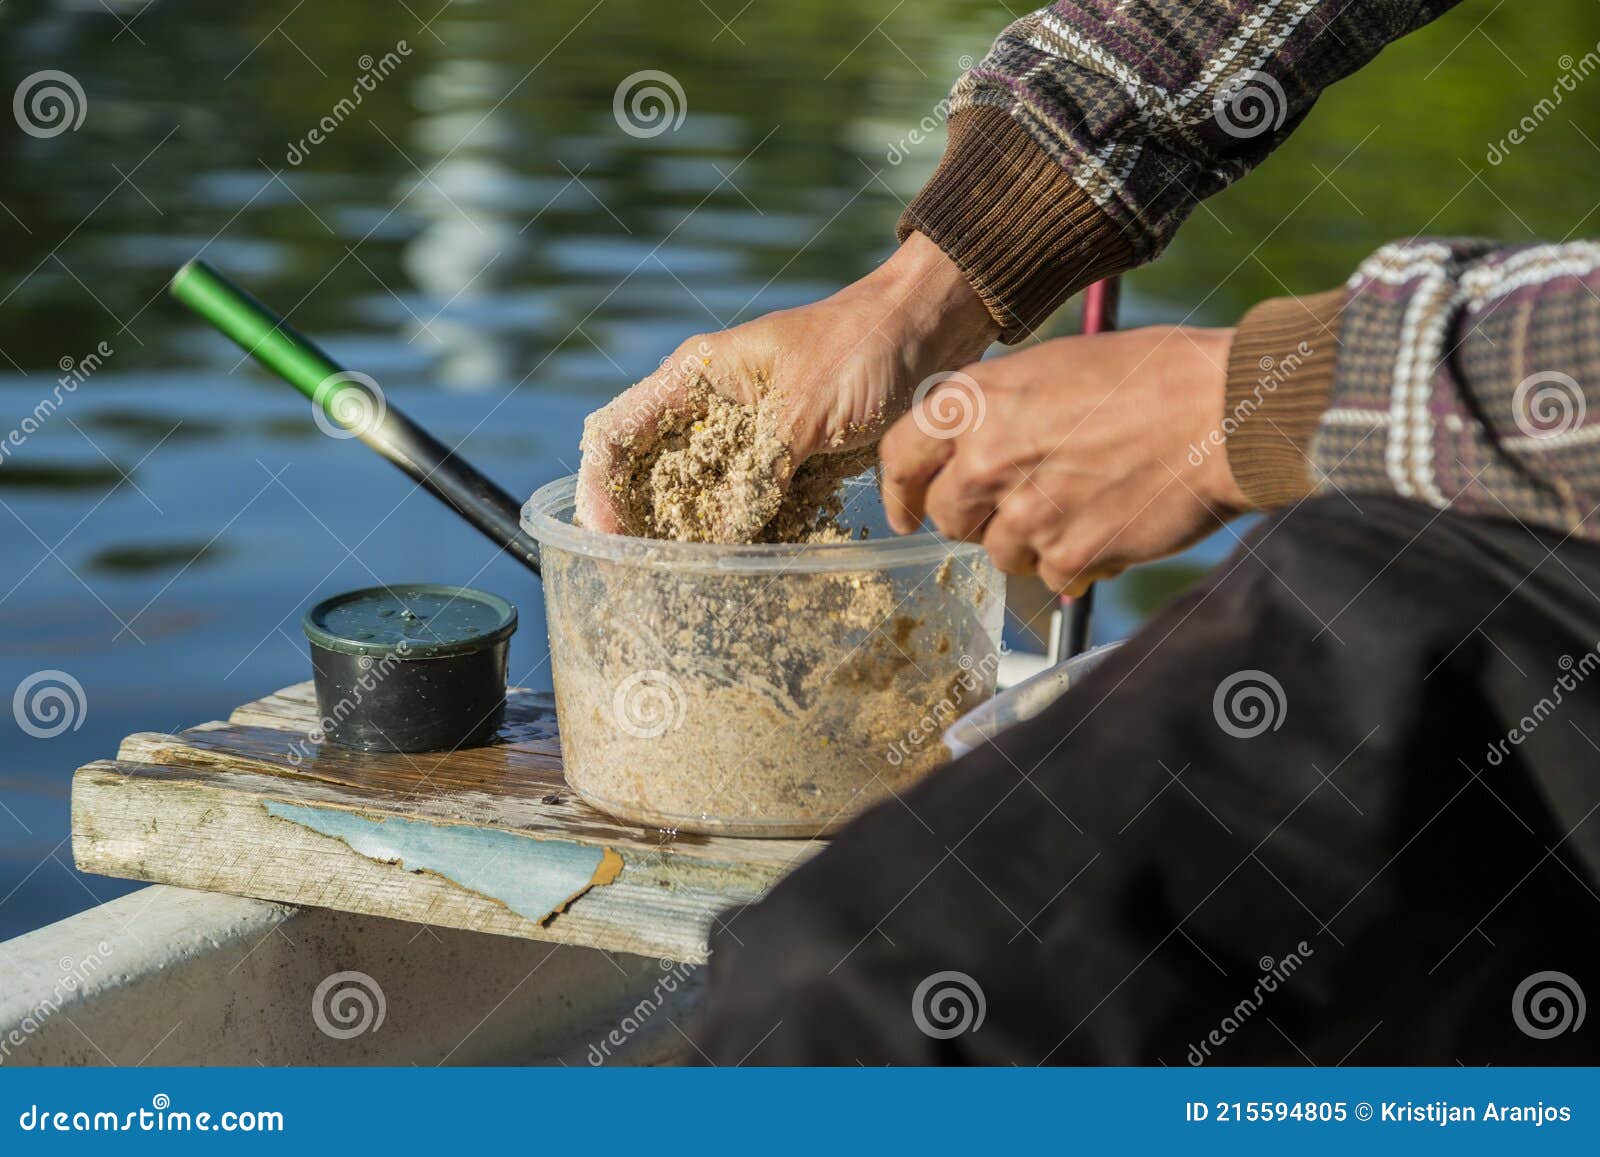 Close Up of Hands Preparing Fish Chum Stock Image - Image of plastic,  fishing: 215594805